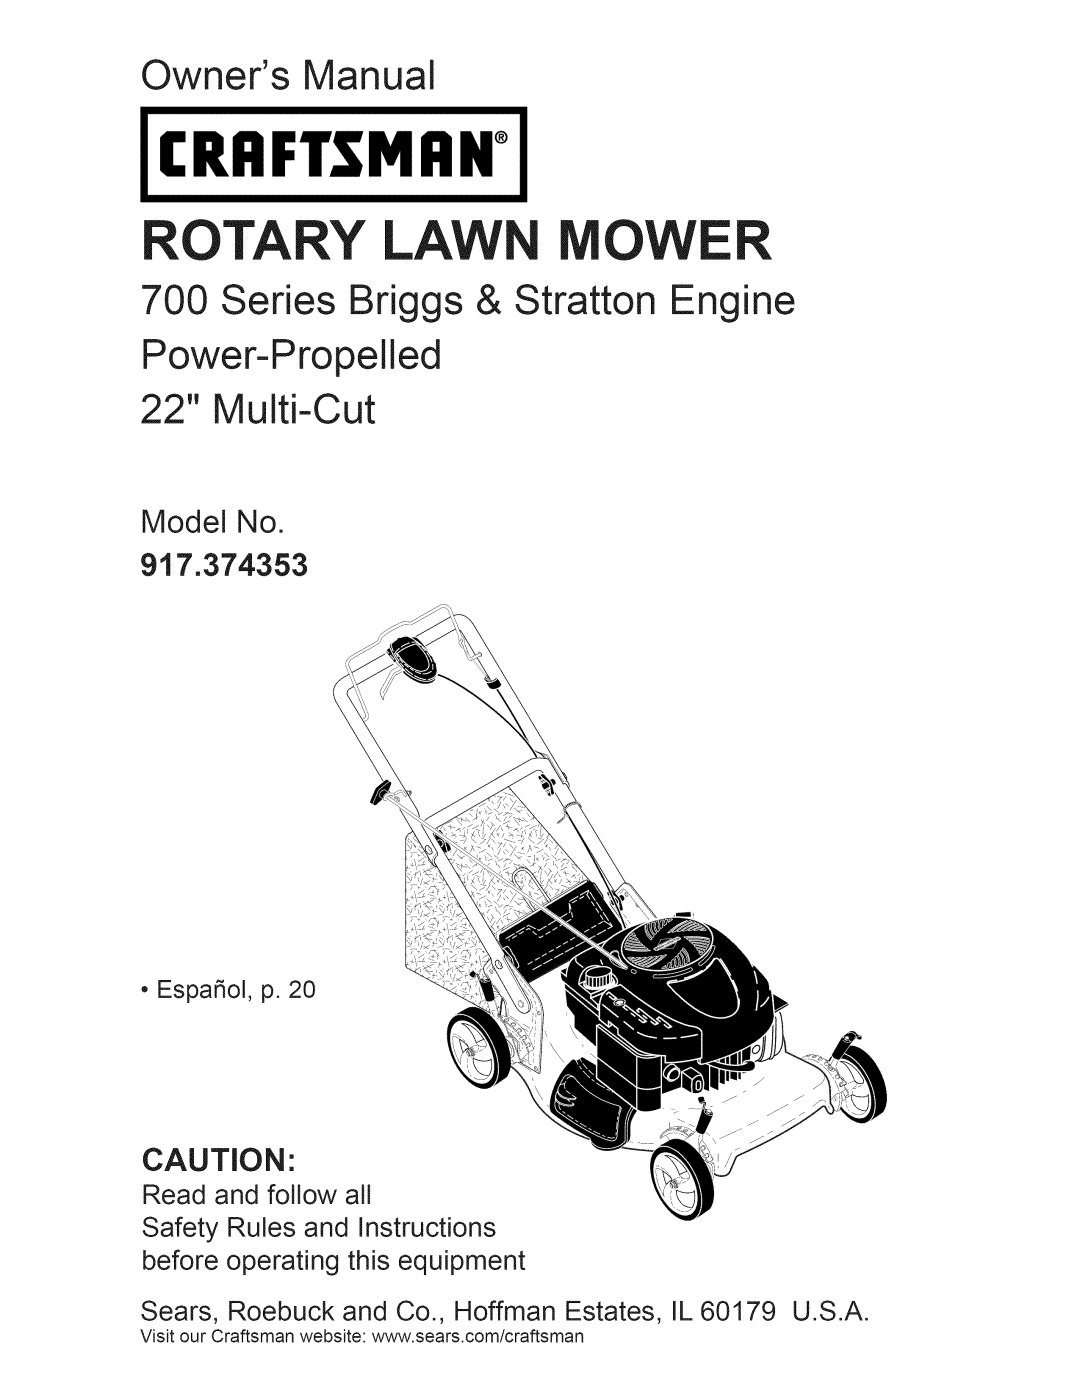 Craftsman owner manual Model No 917.374353, Craftsman, Rotary Lawn Mower, Owners Manual, Power-Propelled 22 Multi-Cut 